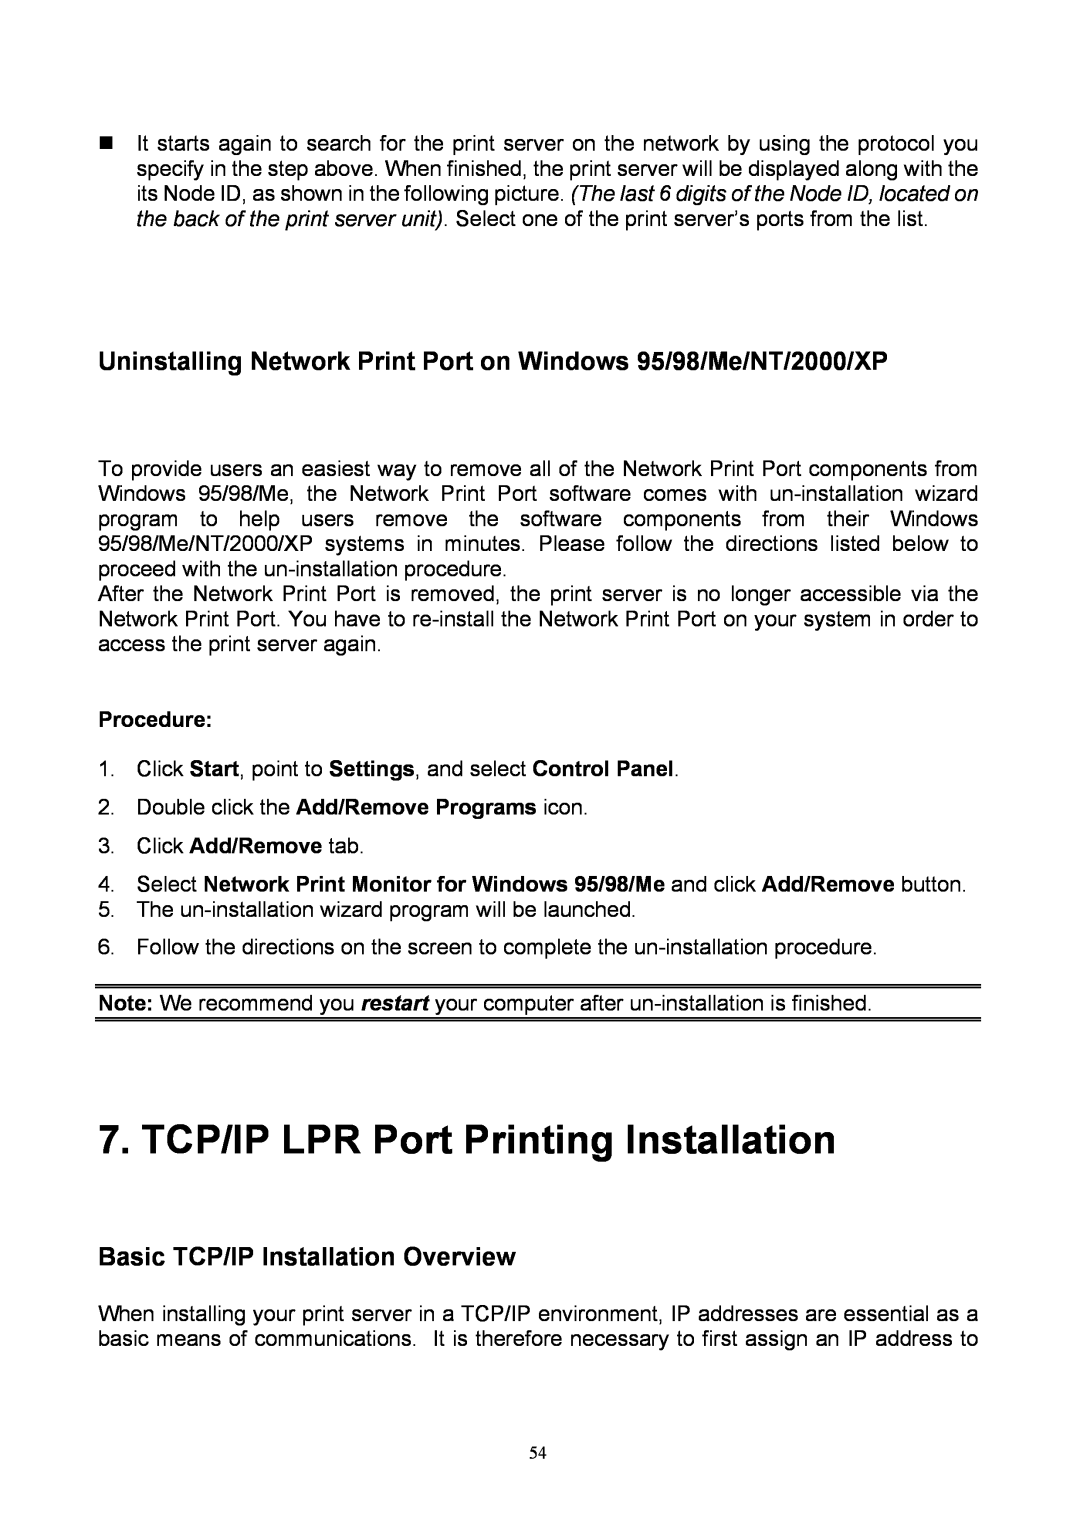 TRENDnet TEW-P1U TCP/IP LPR Port Printing Installation, Uninstalling Network Print Port on Windows 95/98/Me/NT/2000/XP 